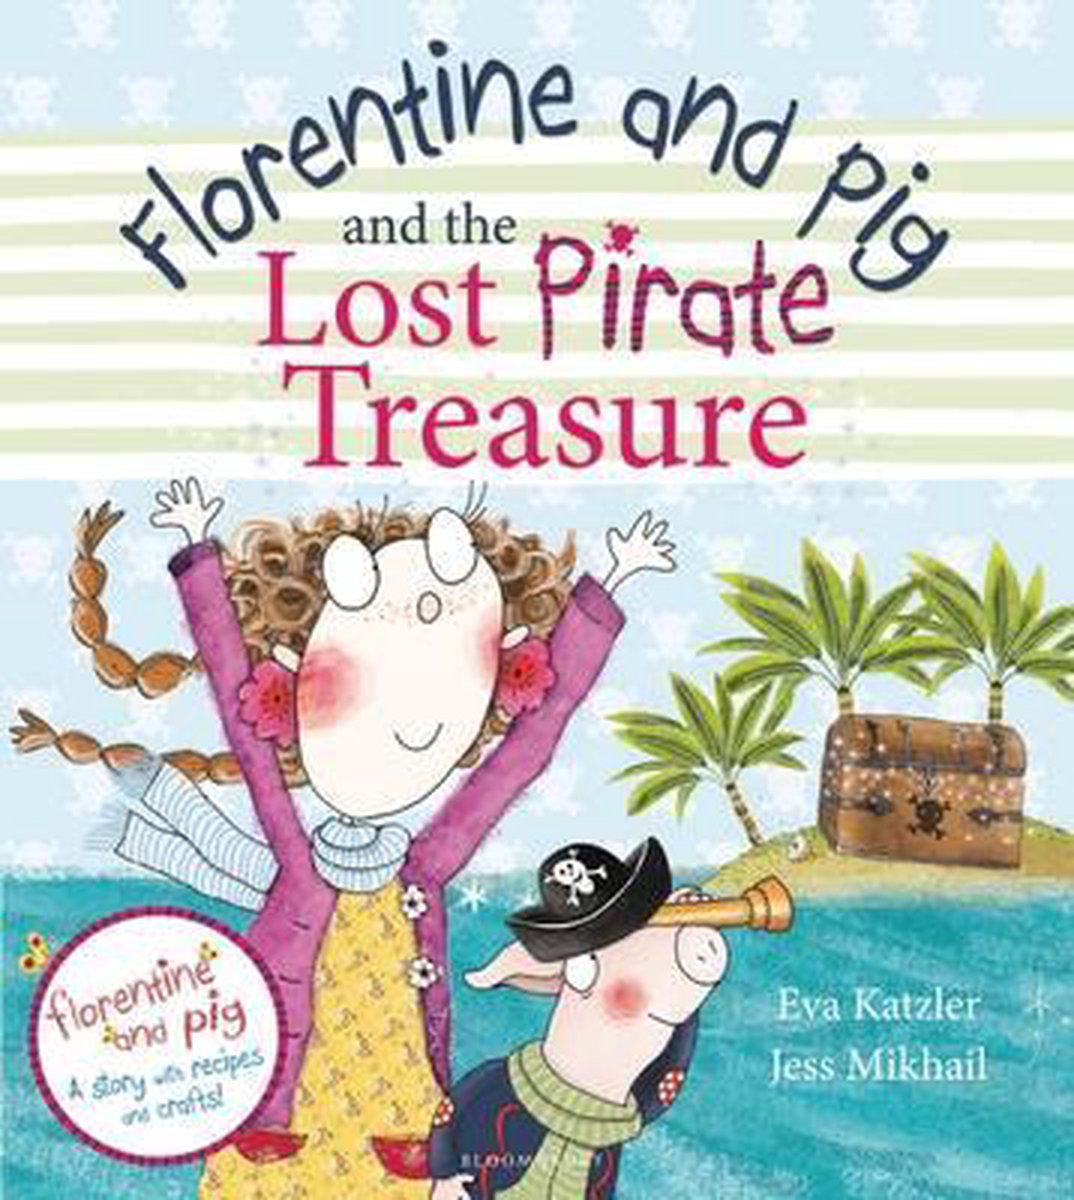 Florentine & Pig & Lost Pirate Treasure